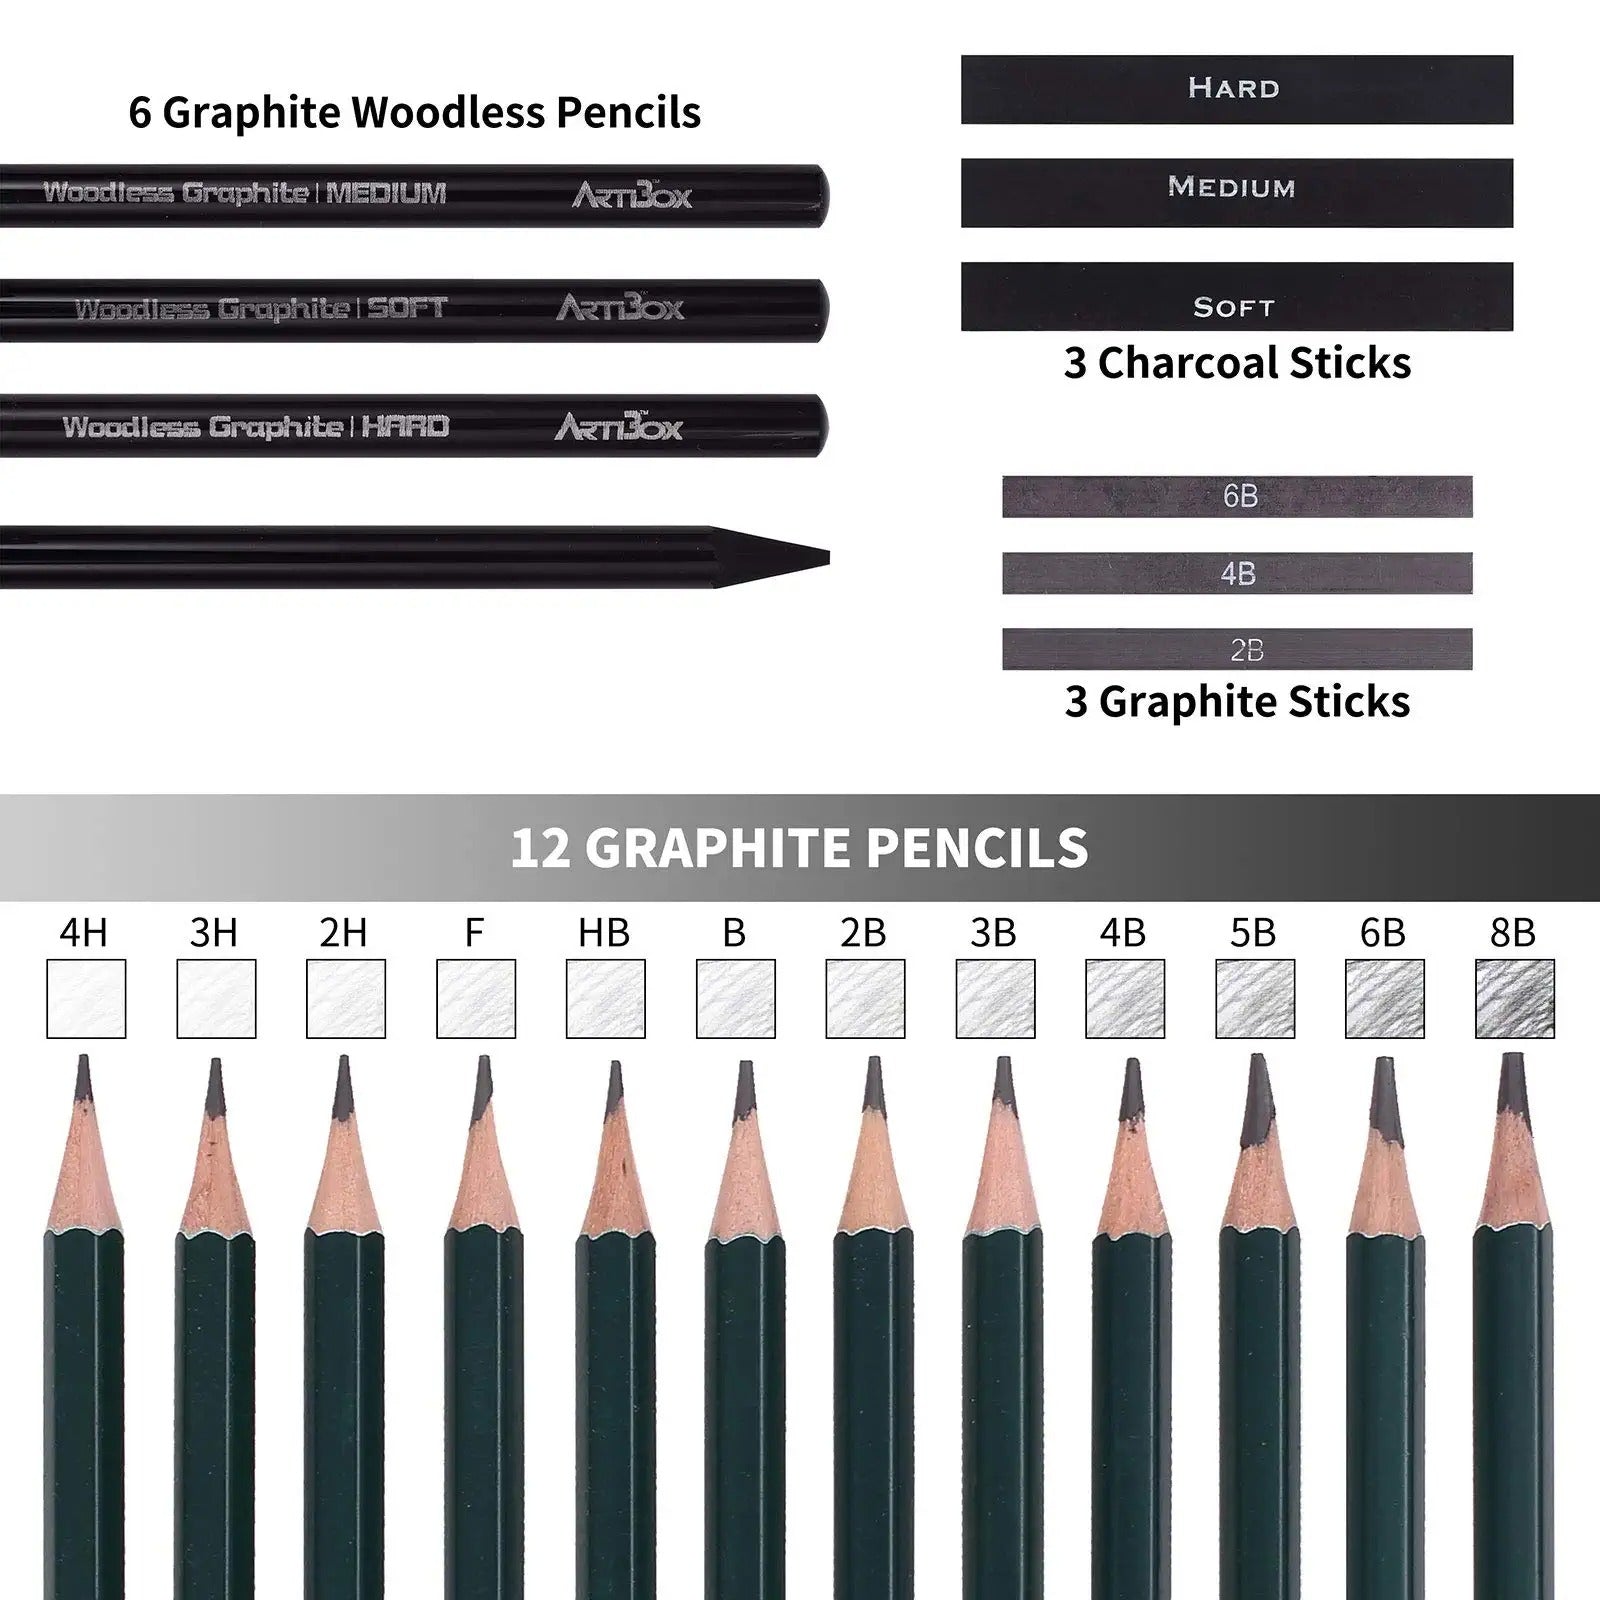 Professional Art Set 32 PCS Drawing and Sketching Set Charcoal Pencils  Kneaded Eraser Art Kit for Kids Teens